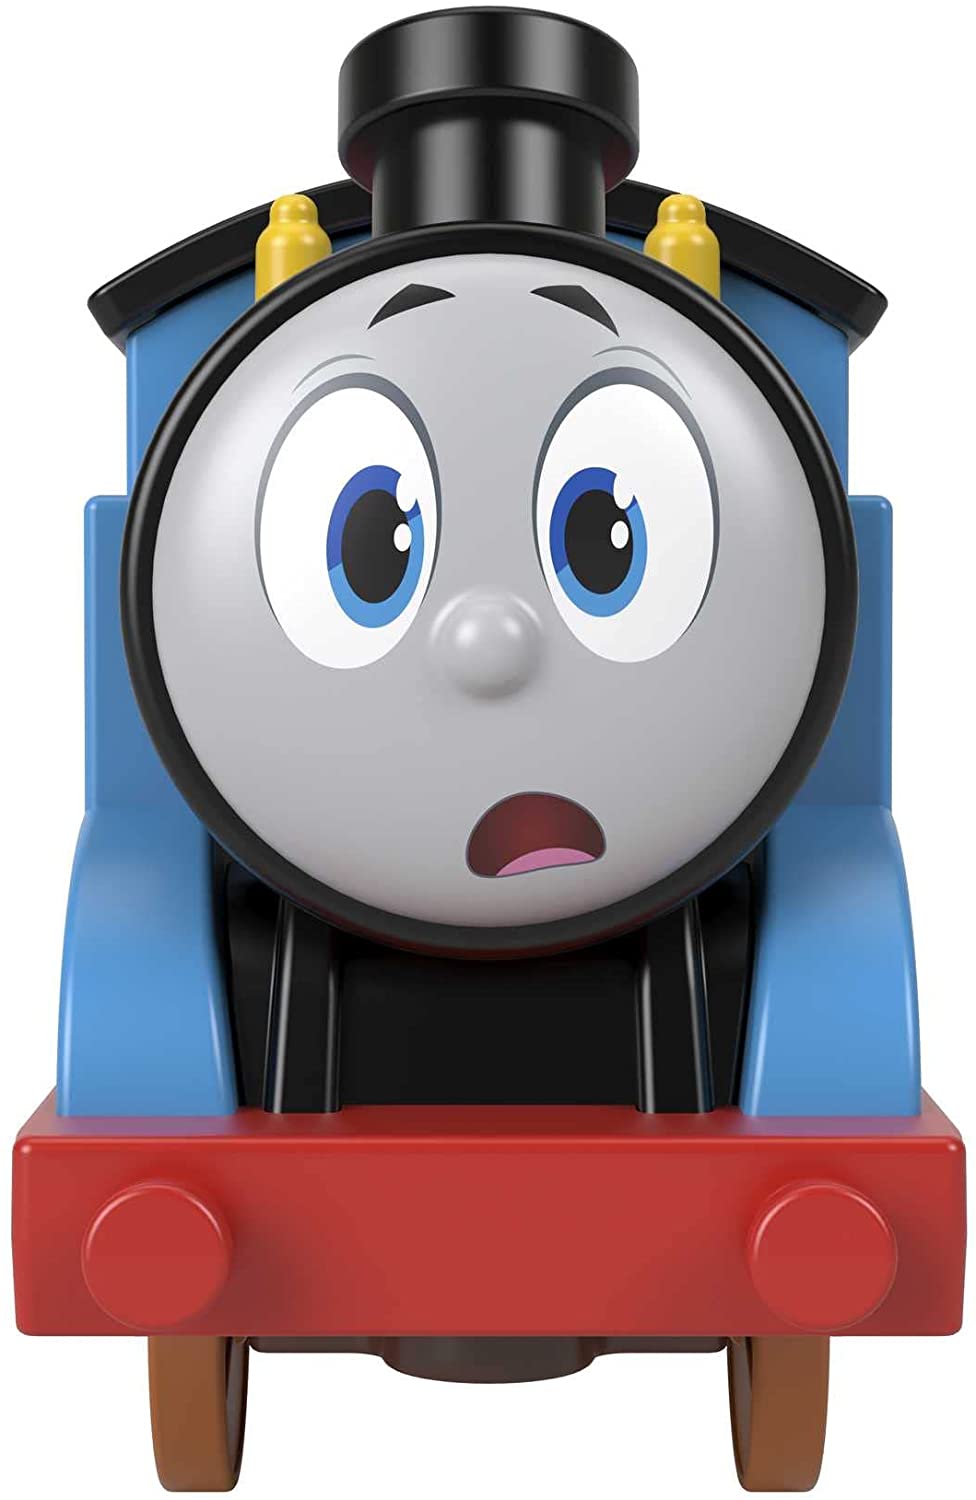 Thomas and friends HDY73 Preschool Trains & Train Sets, Multicolour